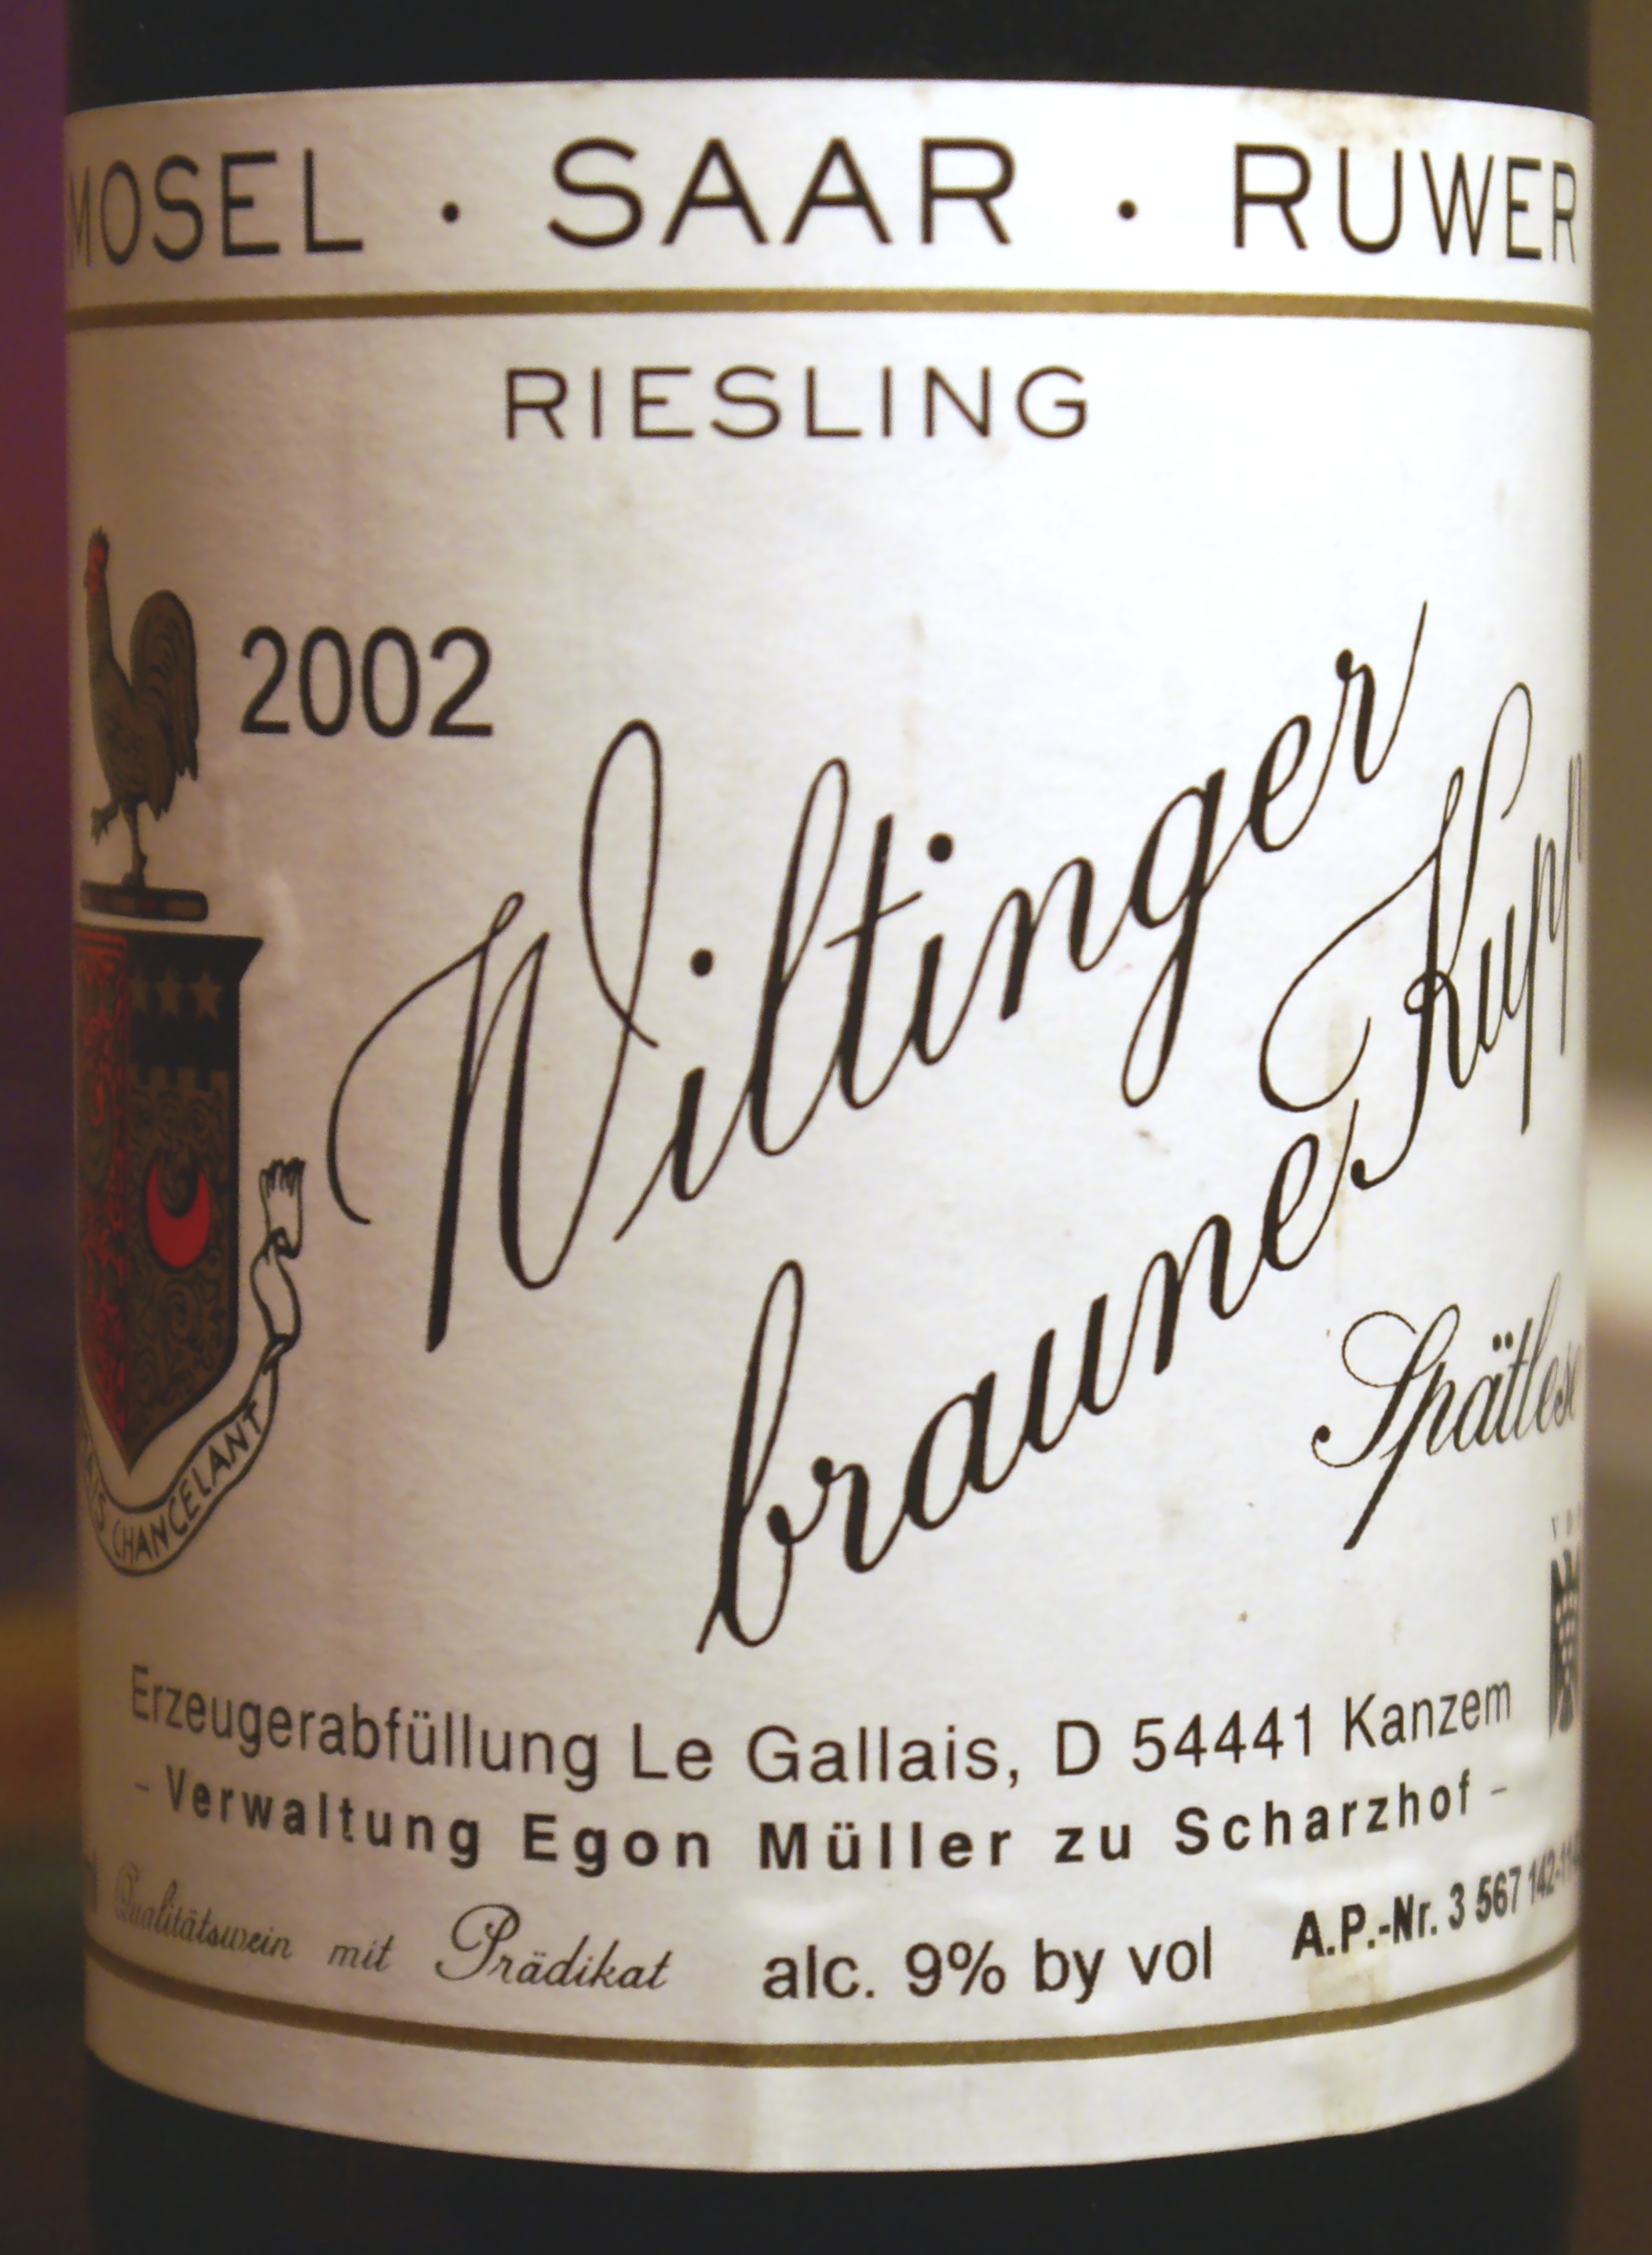 Le Gallais Riesling Wiltinger Braune Kupp Spätlese 2002